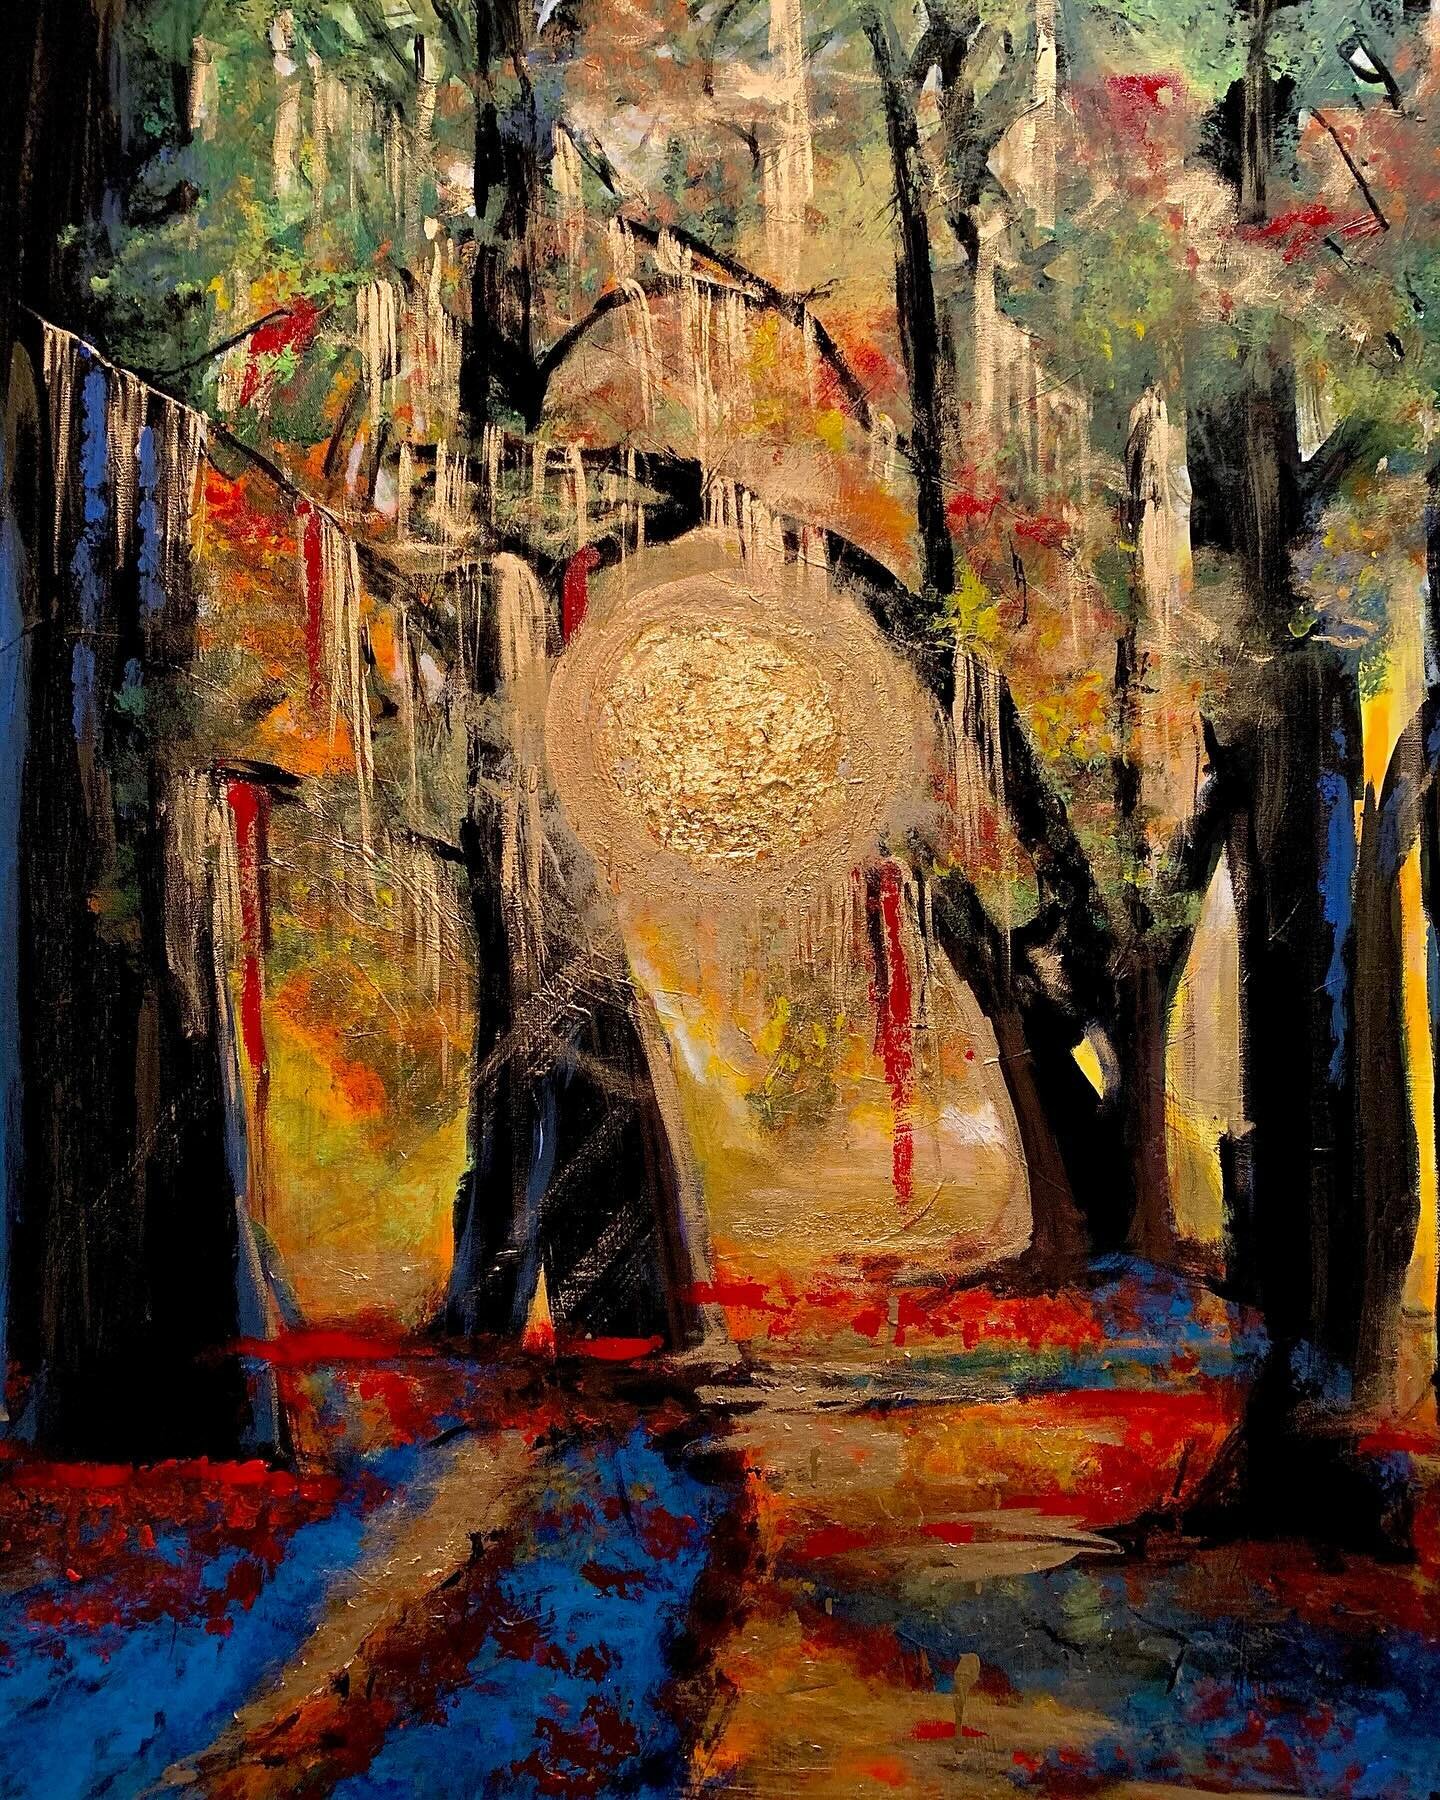 &ldquo;Southern Trees&rdquo;
36&rdquo; x 48&rdquo;
Gold leaf, acrylic, and enamel on canvas
Unframed

#kinyachristianart